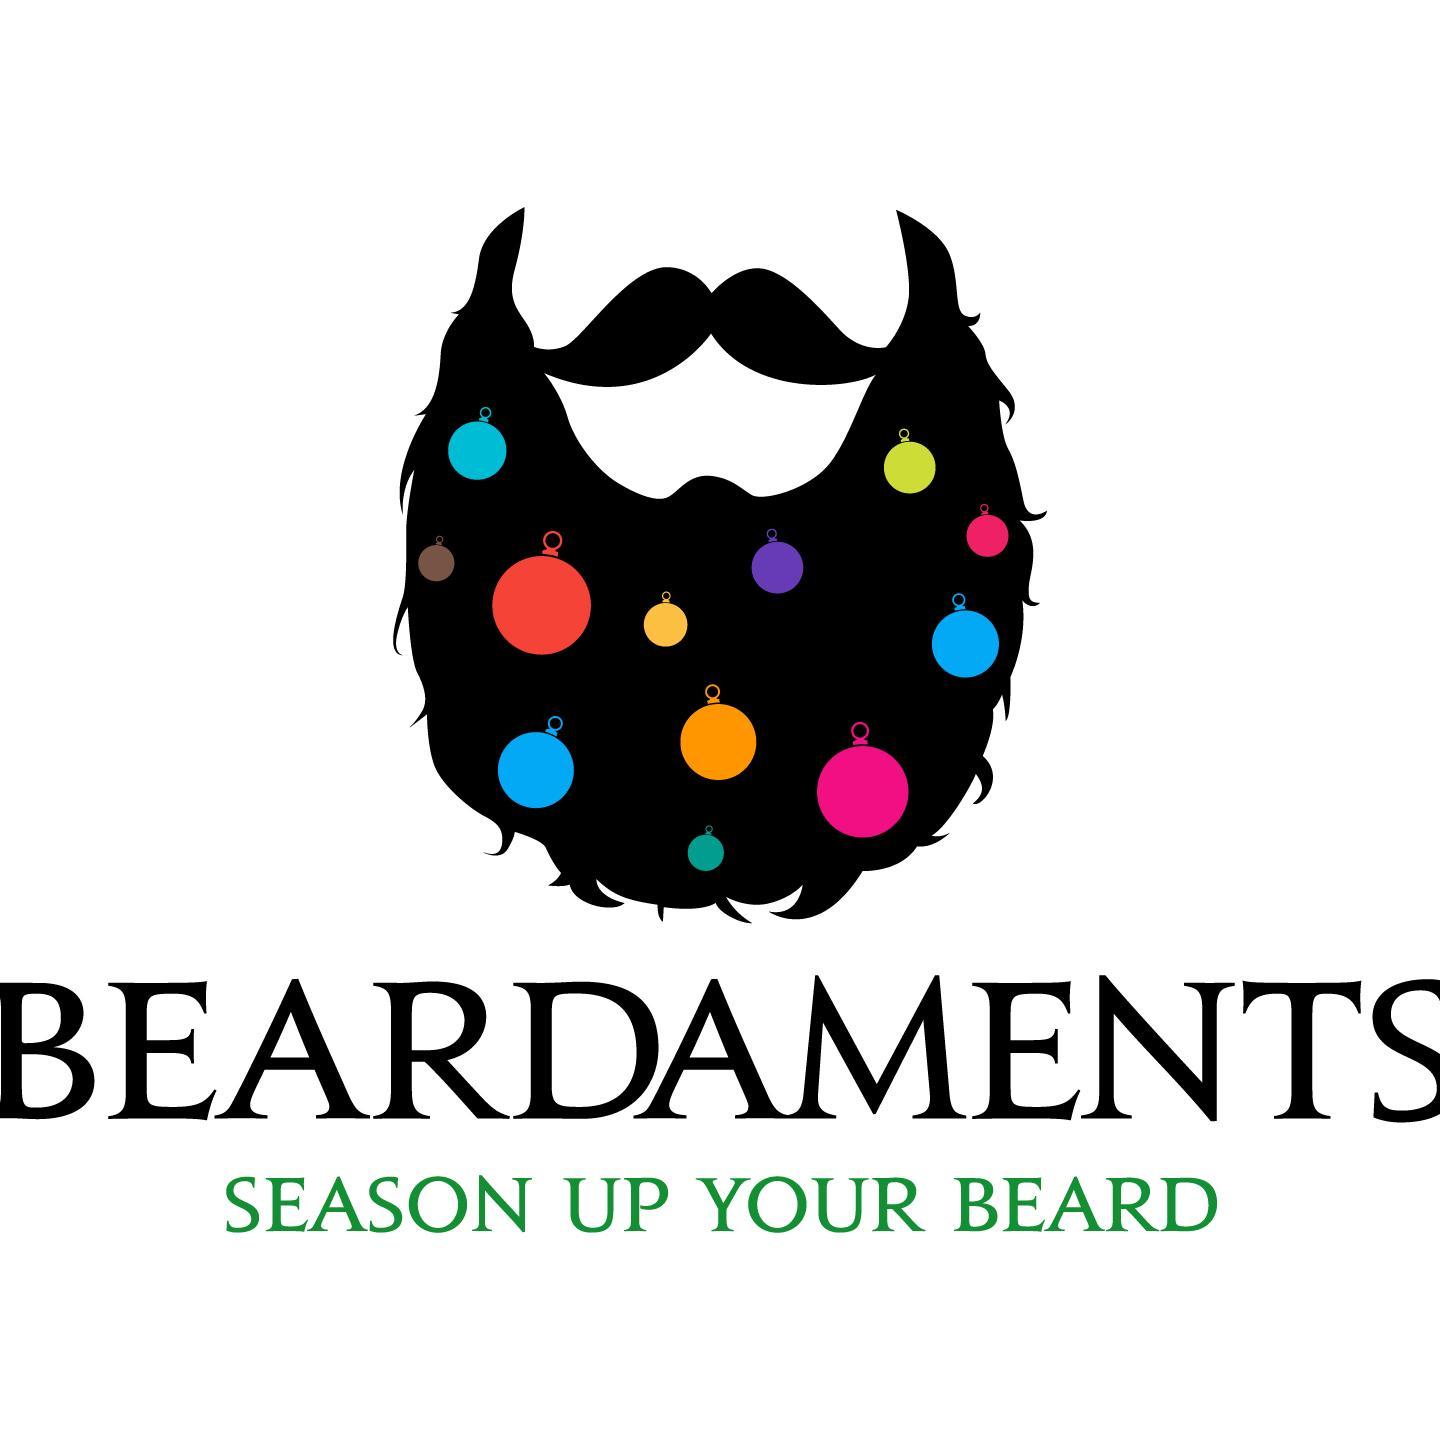 Season up your beard this holiday season!